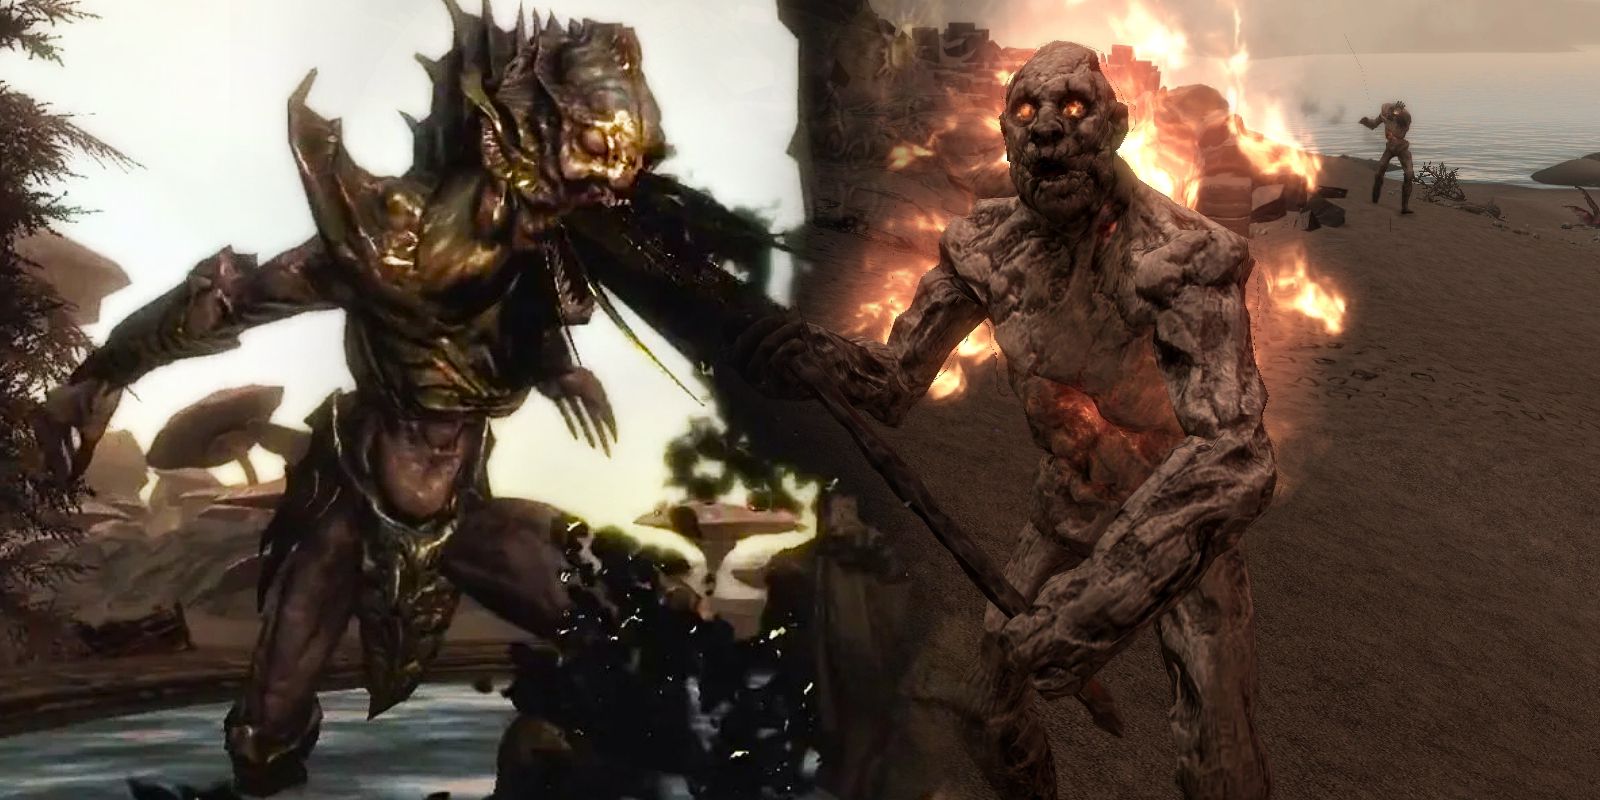 Skyrim's Creepiest &amp; Most Horrifying Enemies